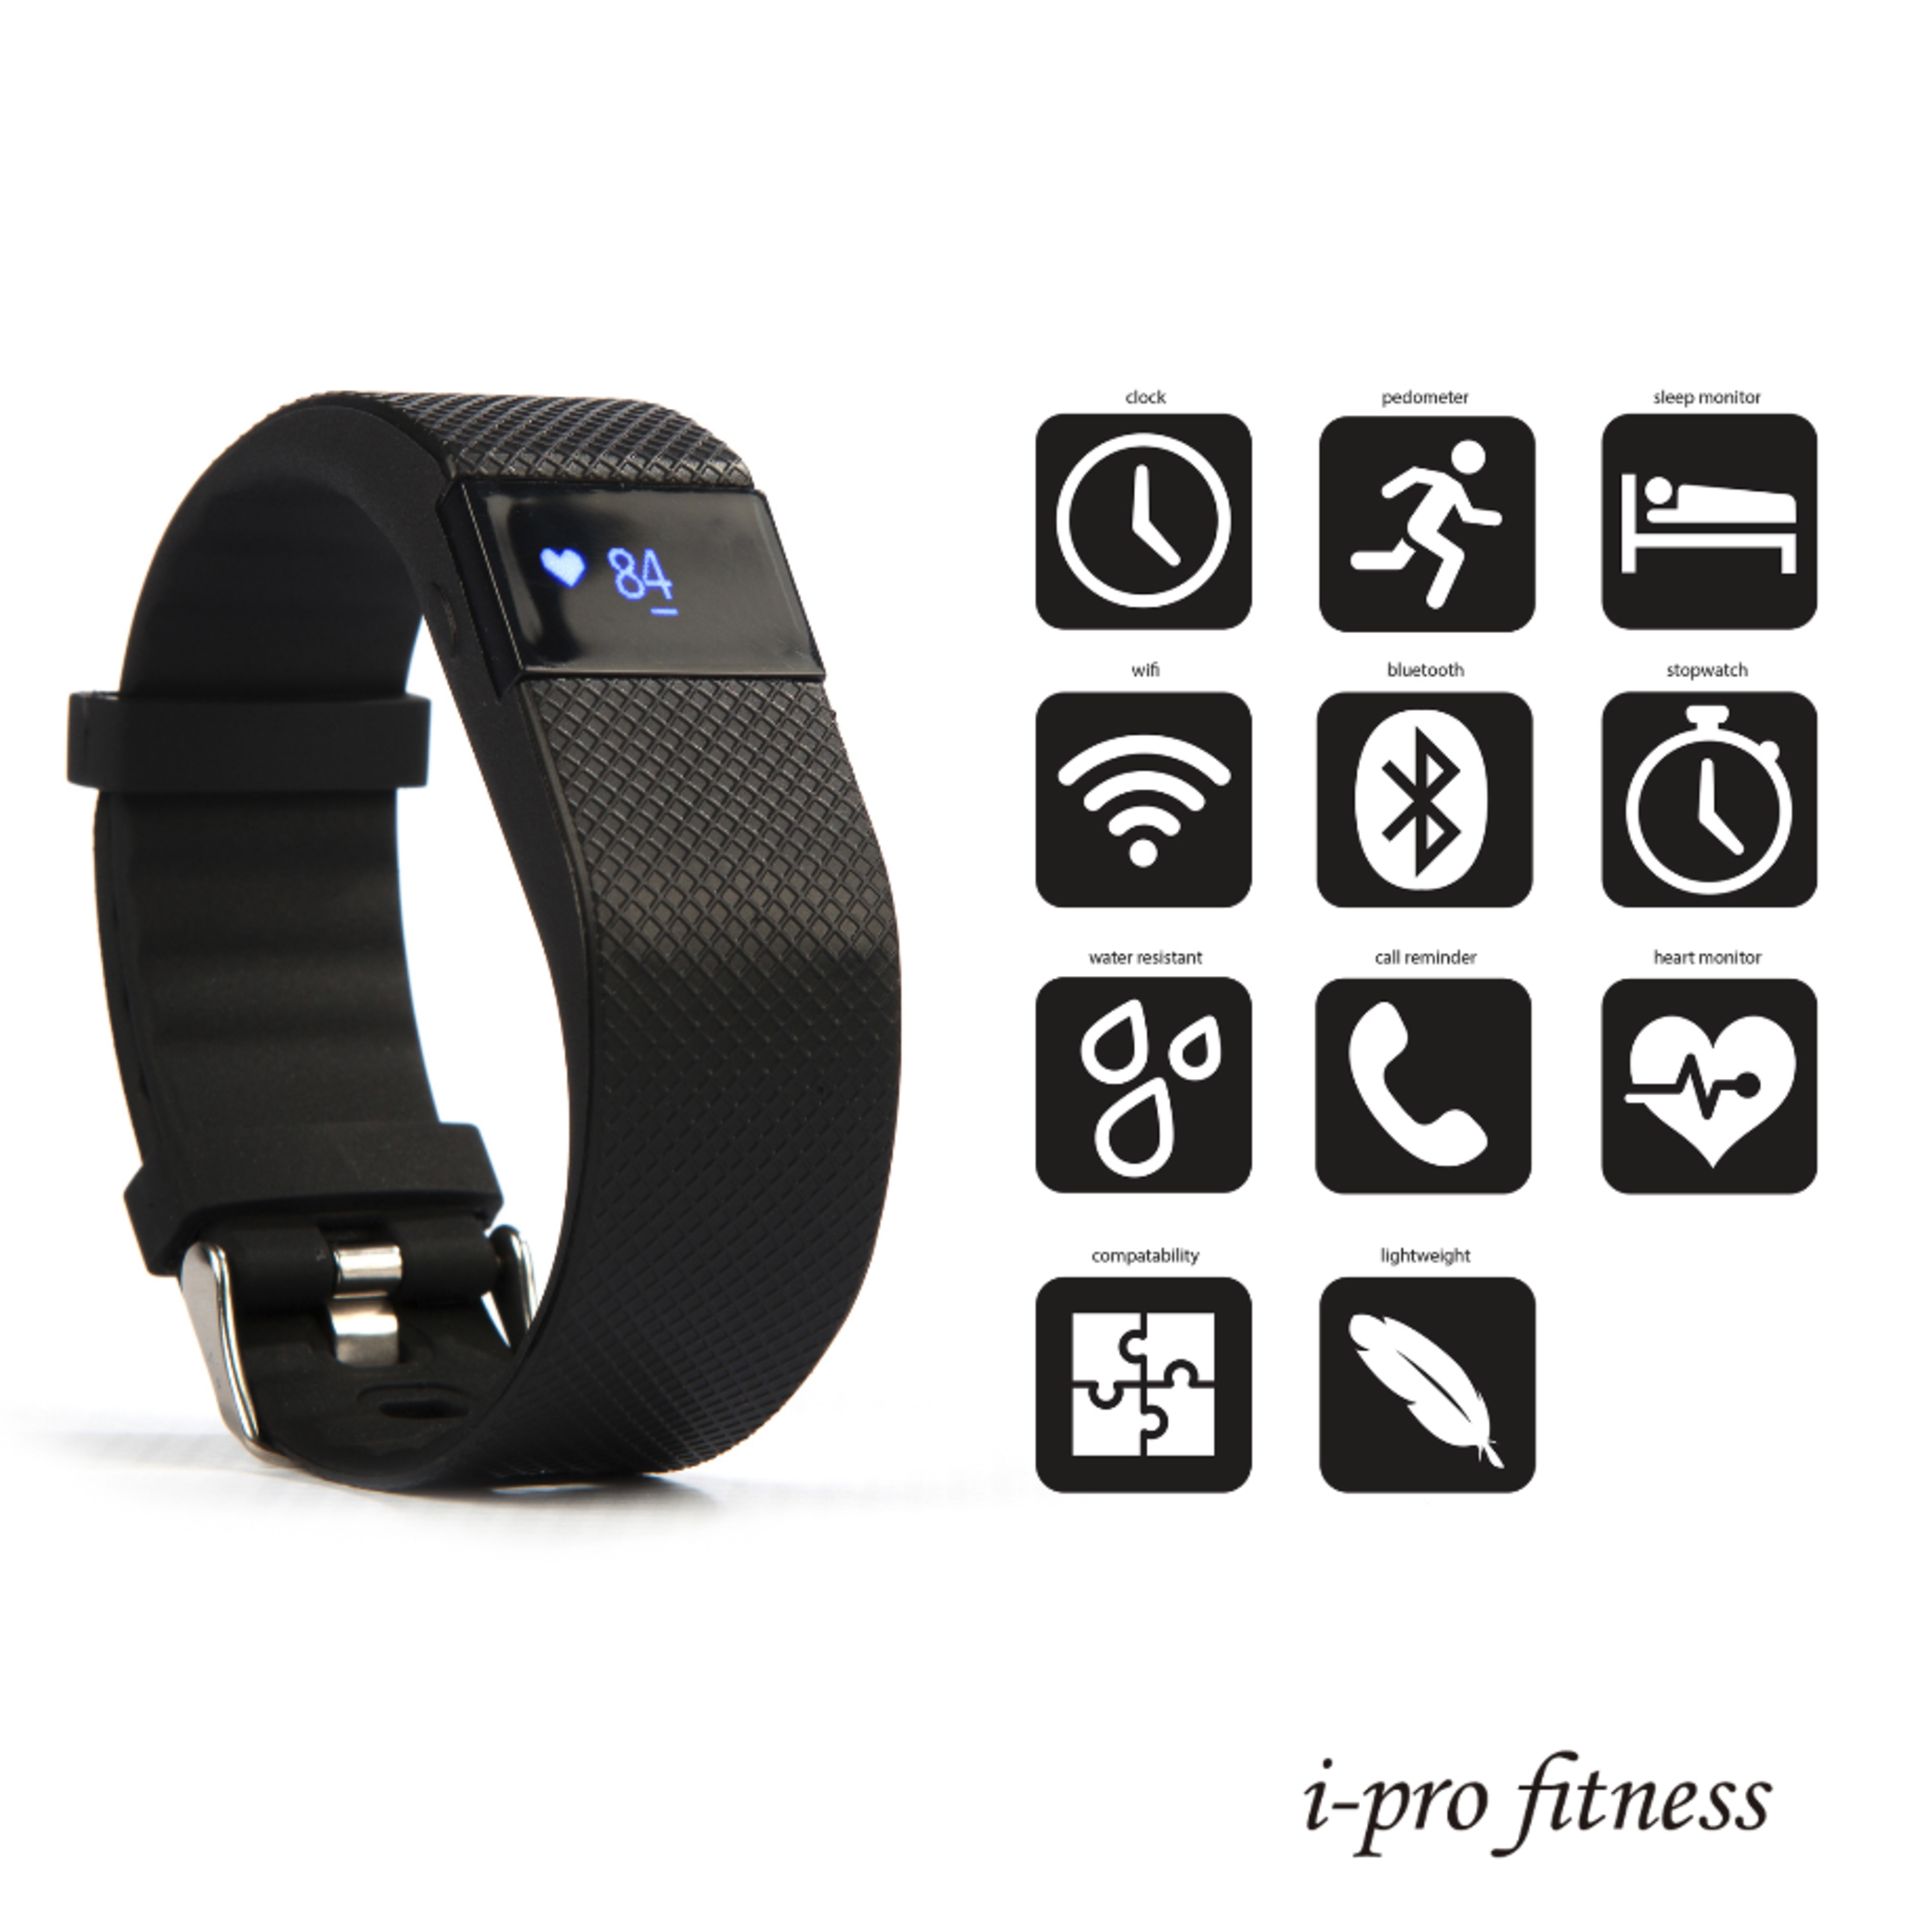 **Trade lot** 50 x Units Fitness Tracker i-pro fitness, Bluetooth 4.0 Sports Smart Bracelet - Image 6 of 8